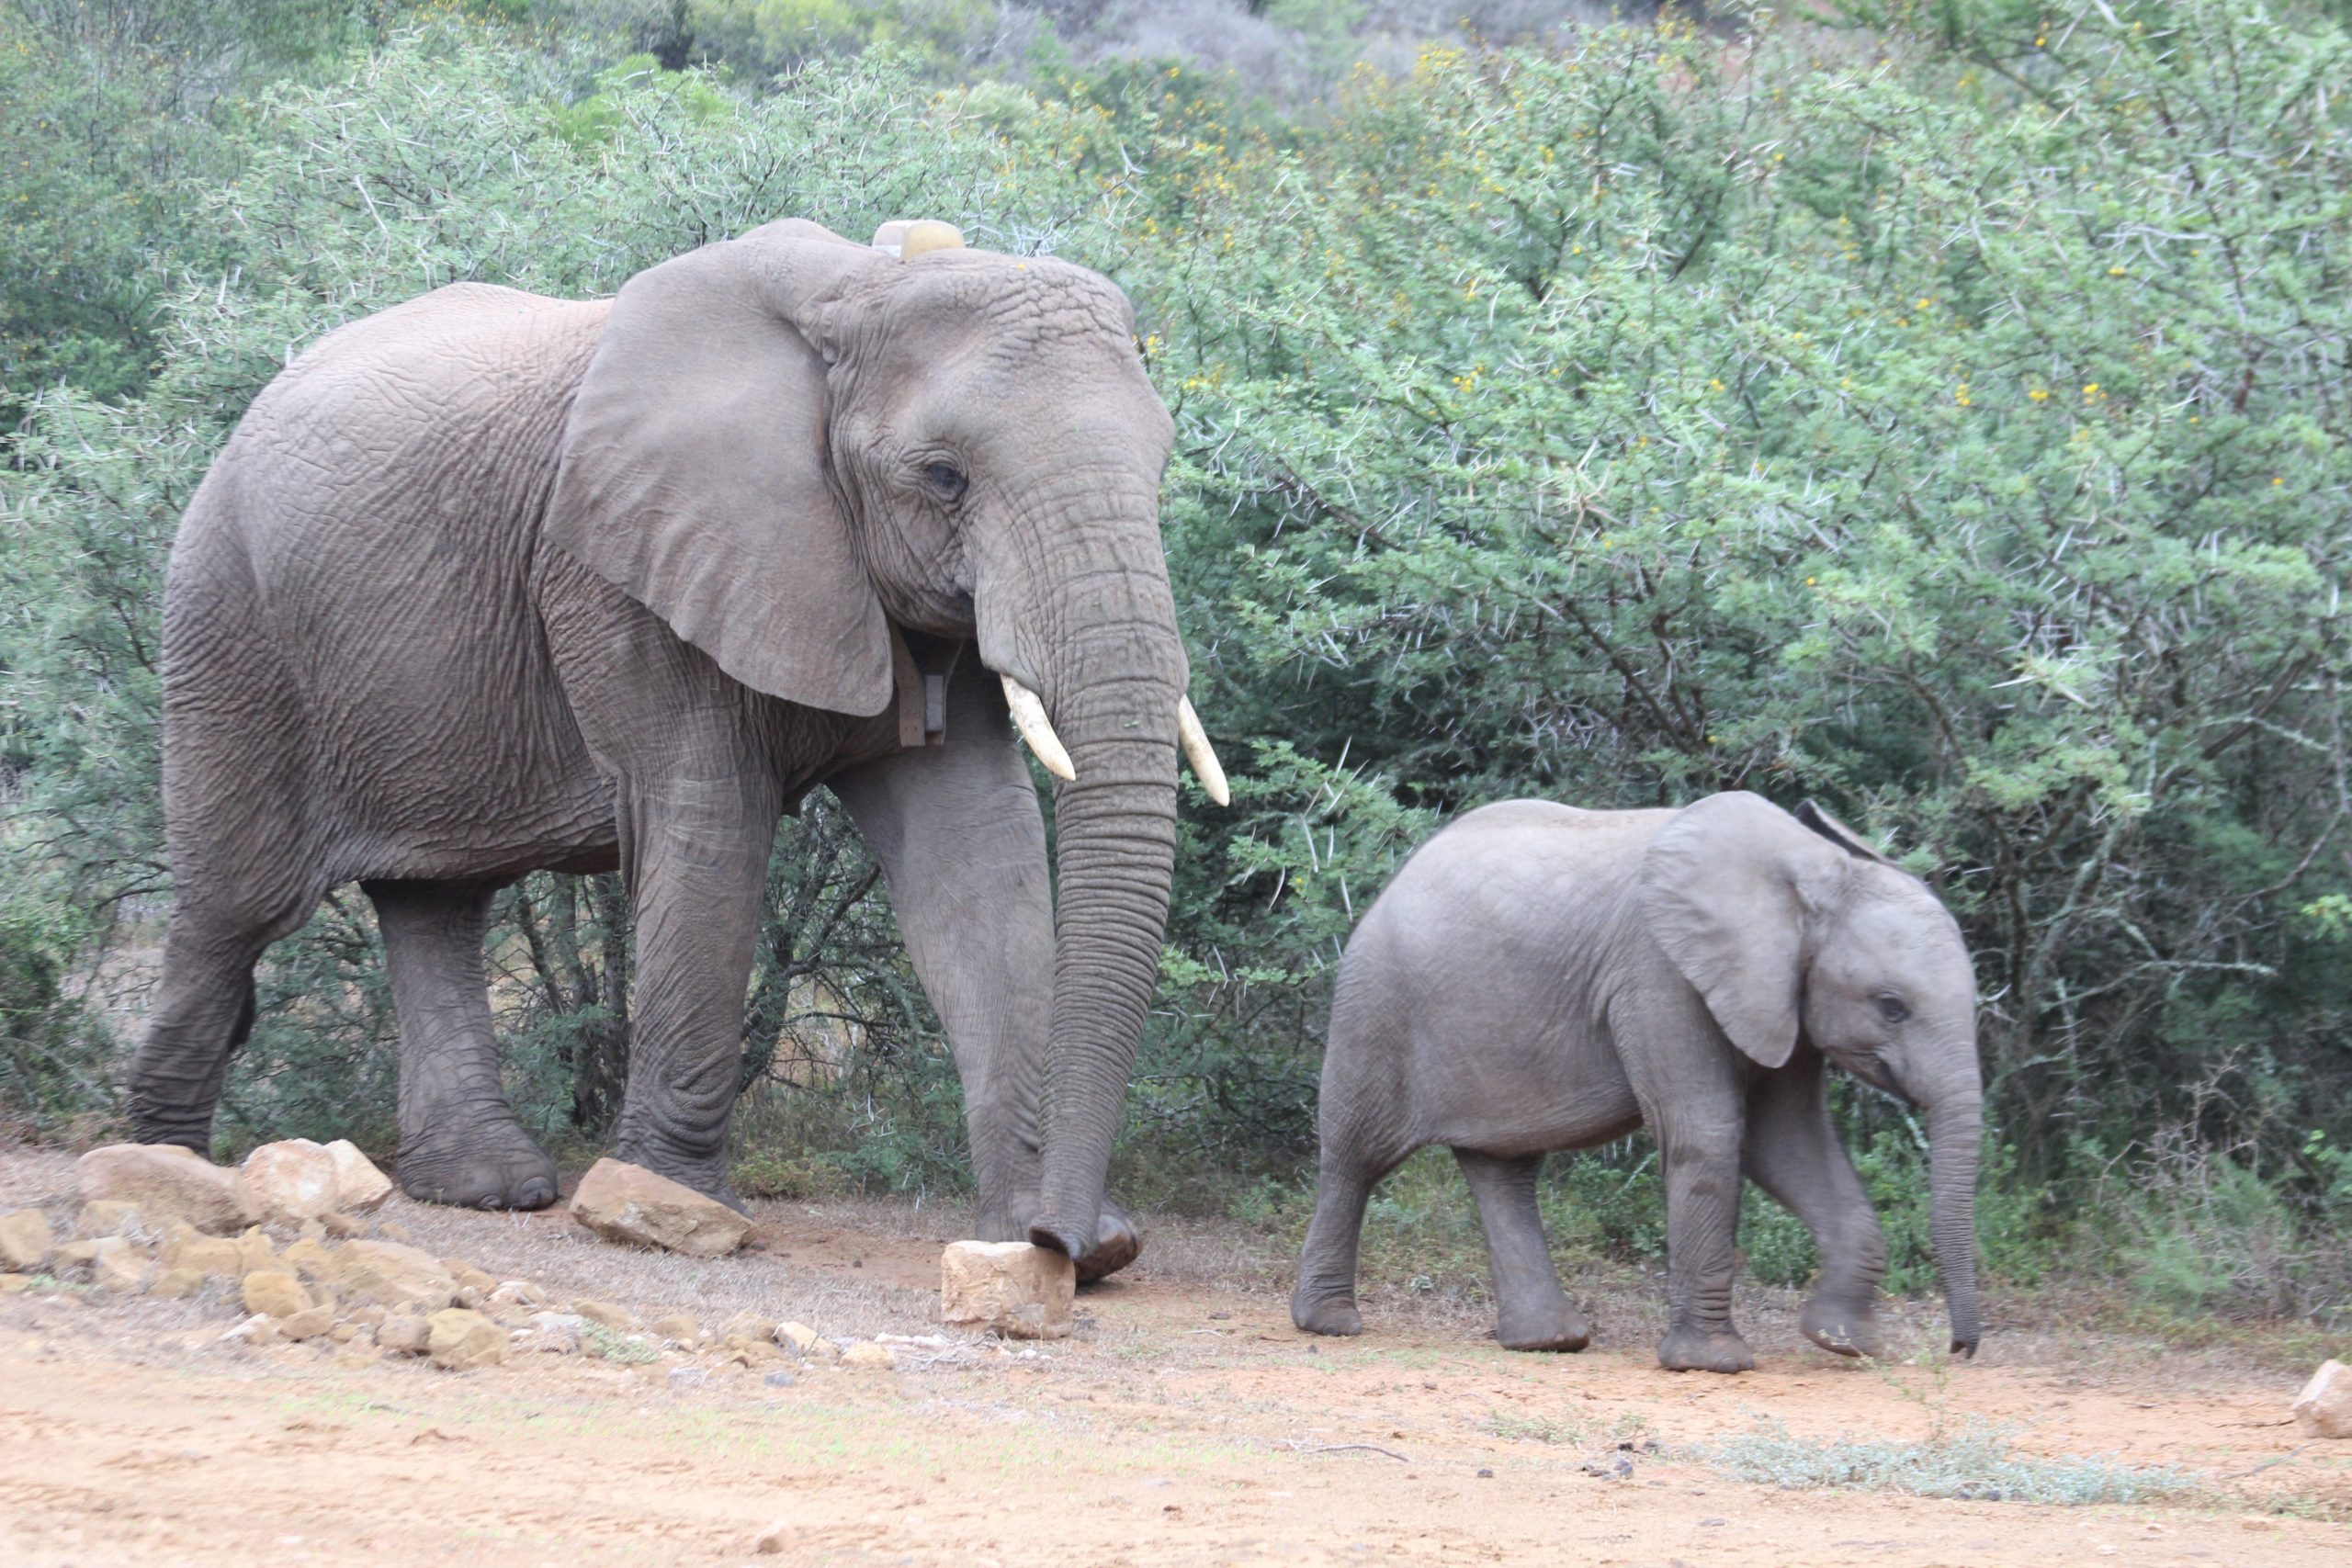 Elephant rescue by one of Loziba’s founding members